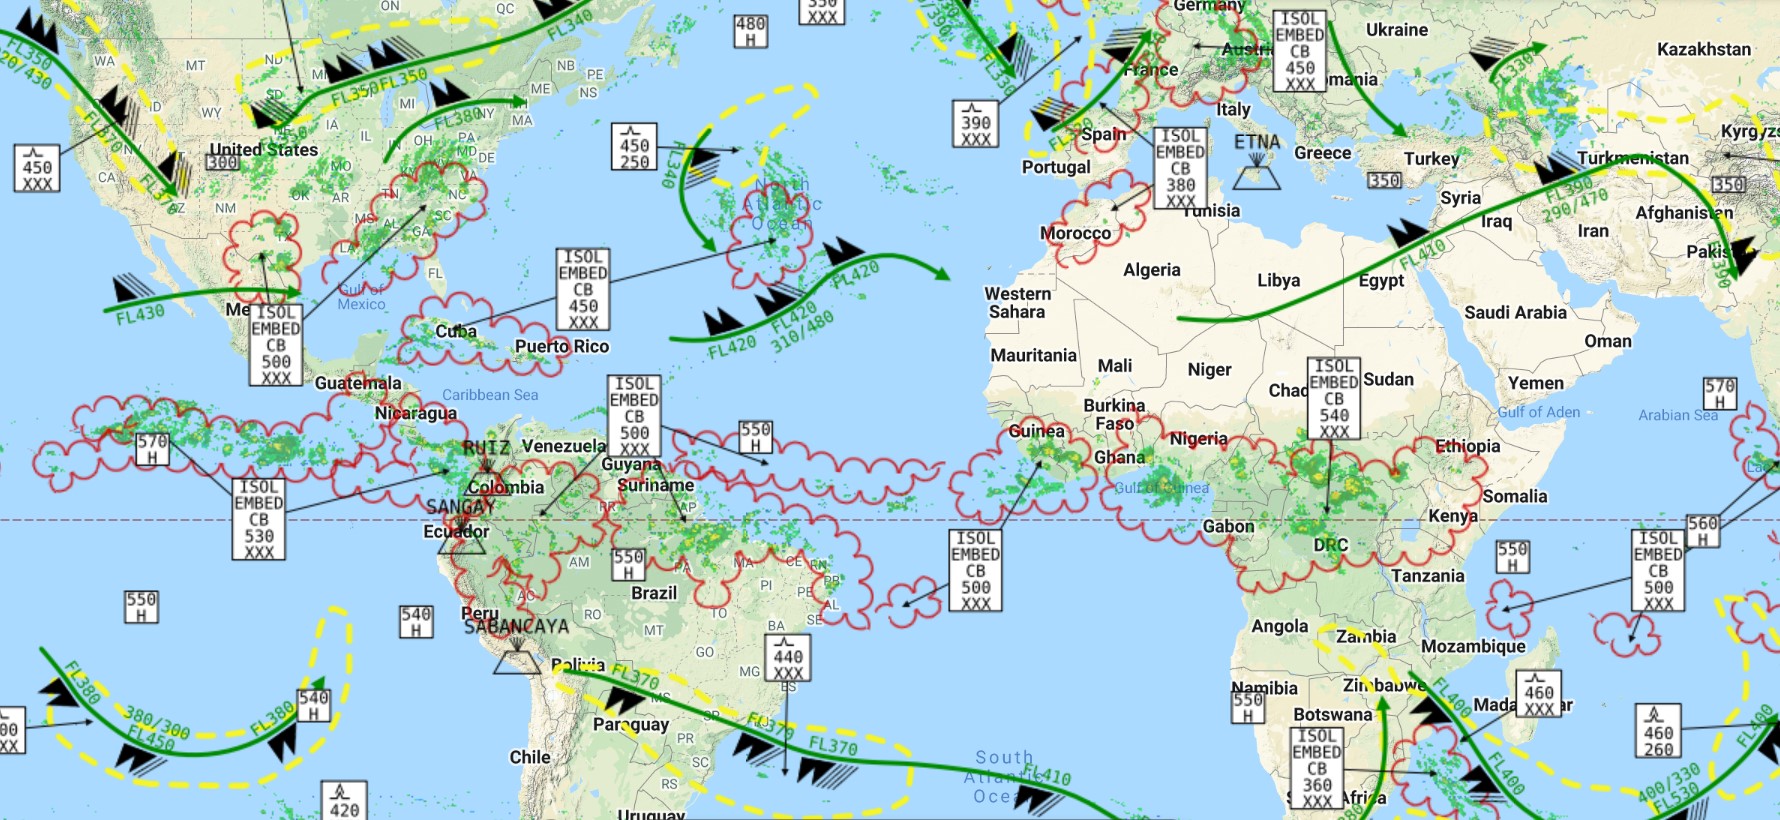 Image of global radar flight hazards with FlightRadar24